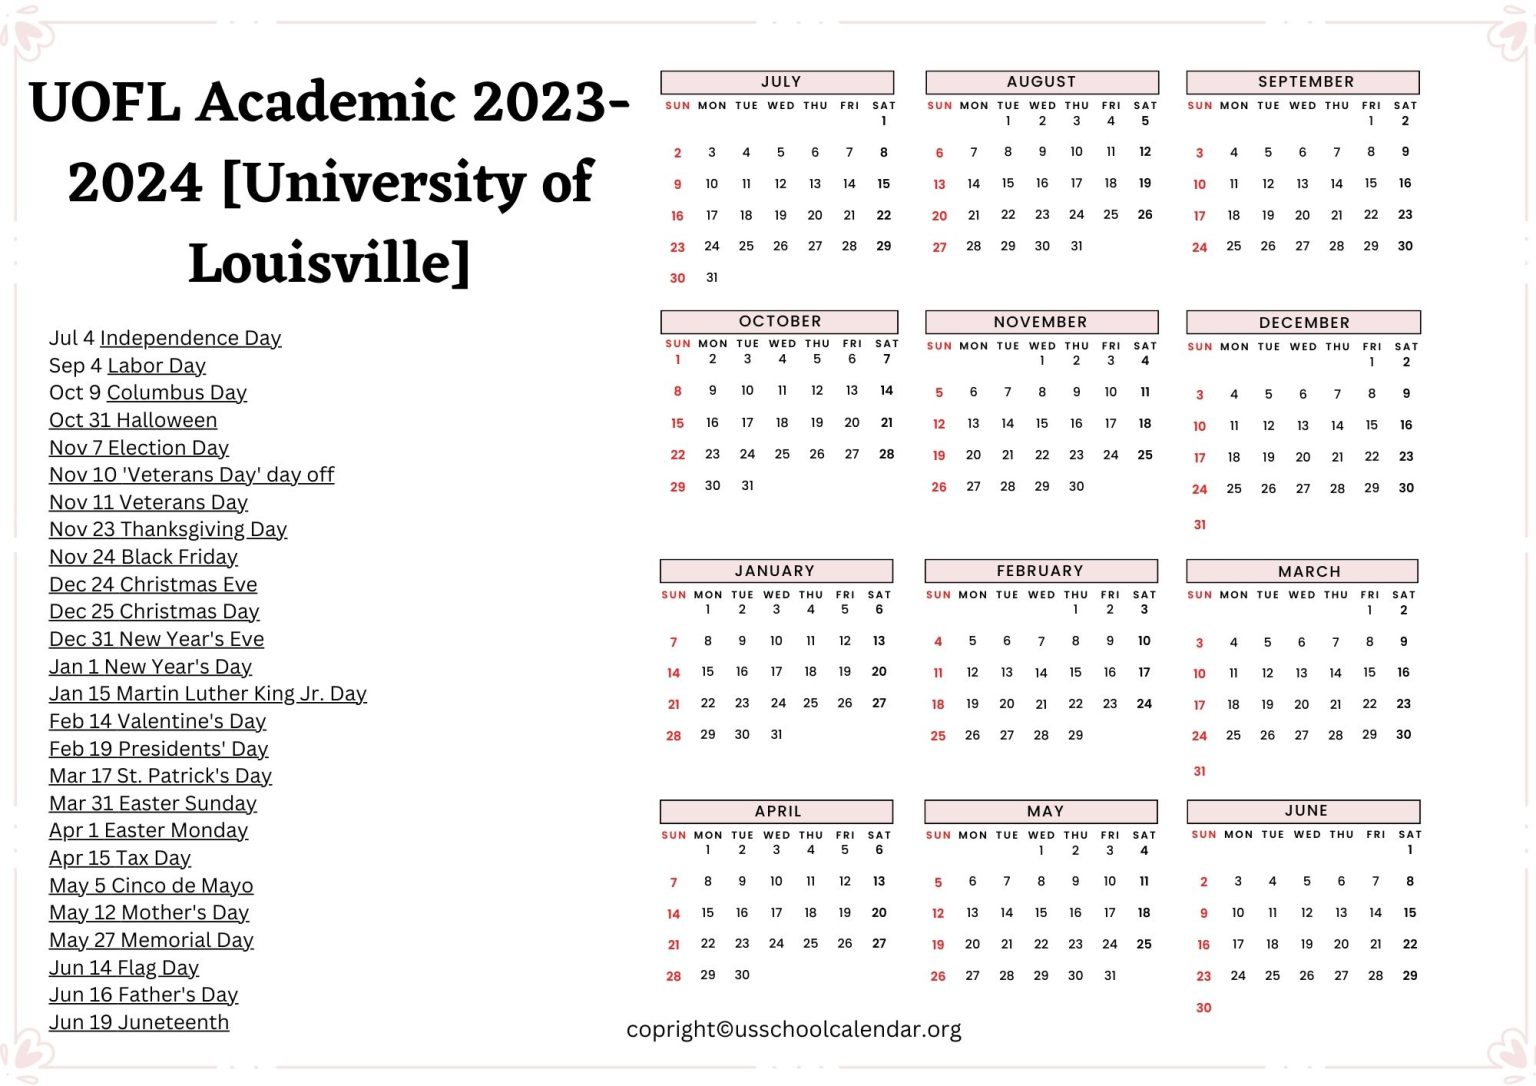 UOFL Academic Calendar 2023-2024 [University of Louisville]